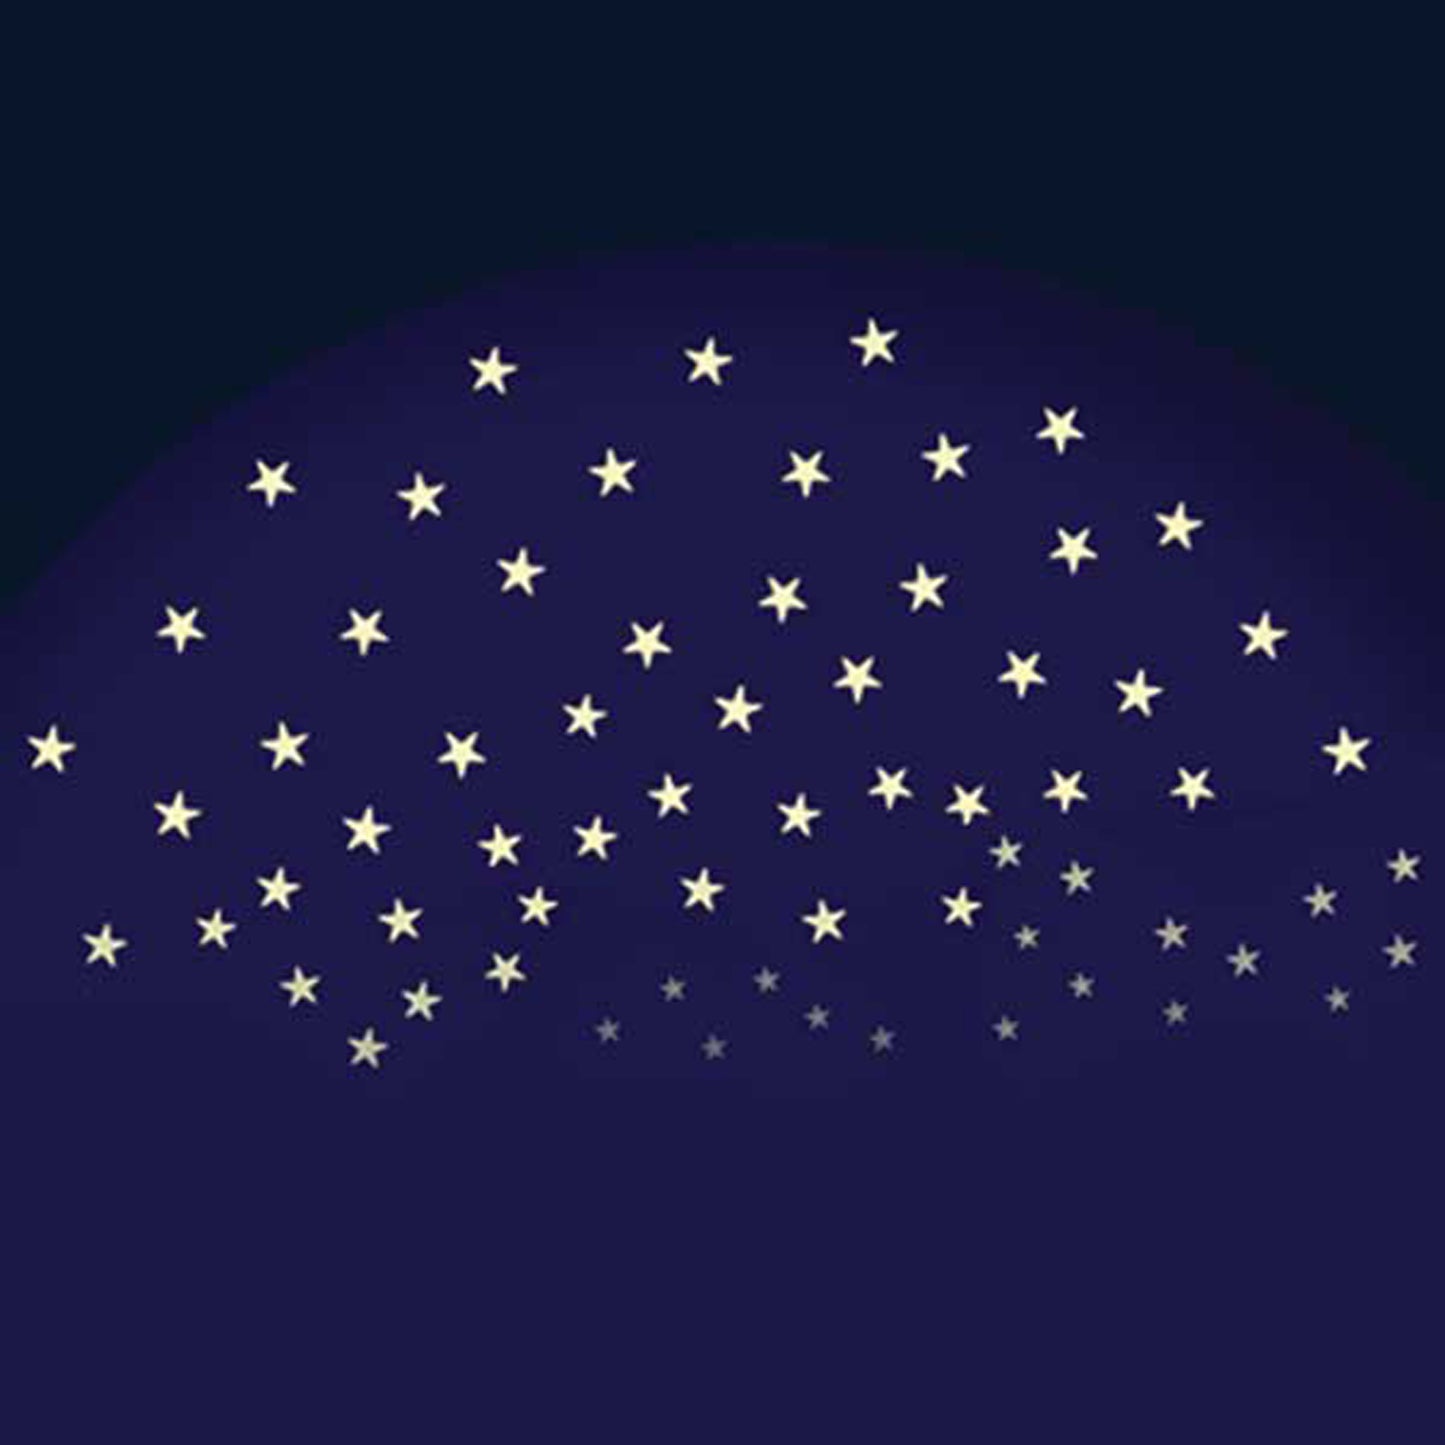 Starry Night 60 stars